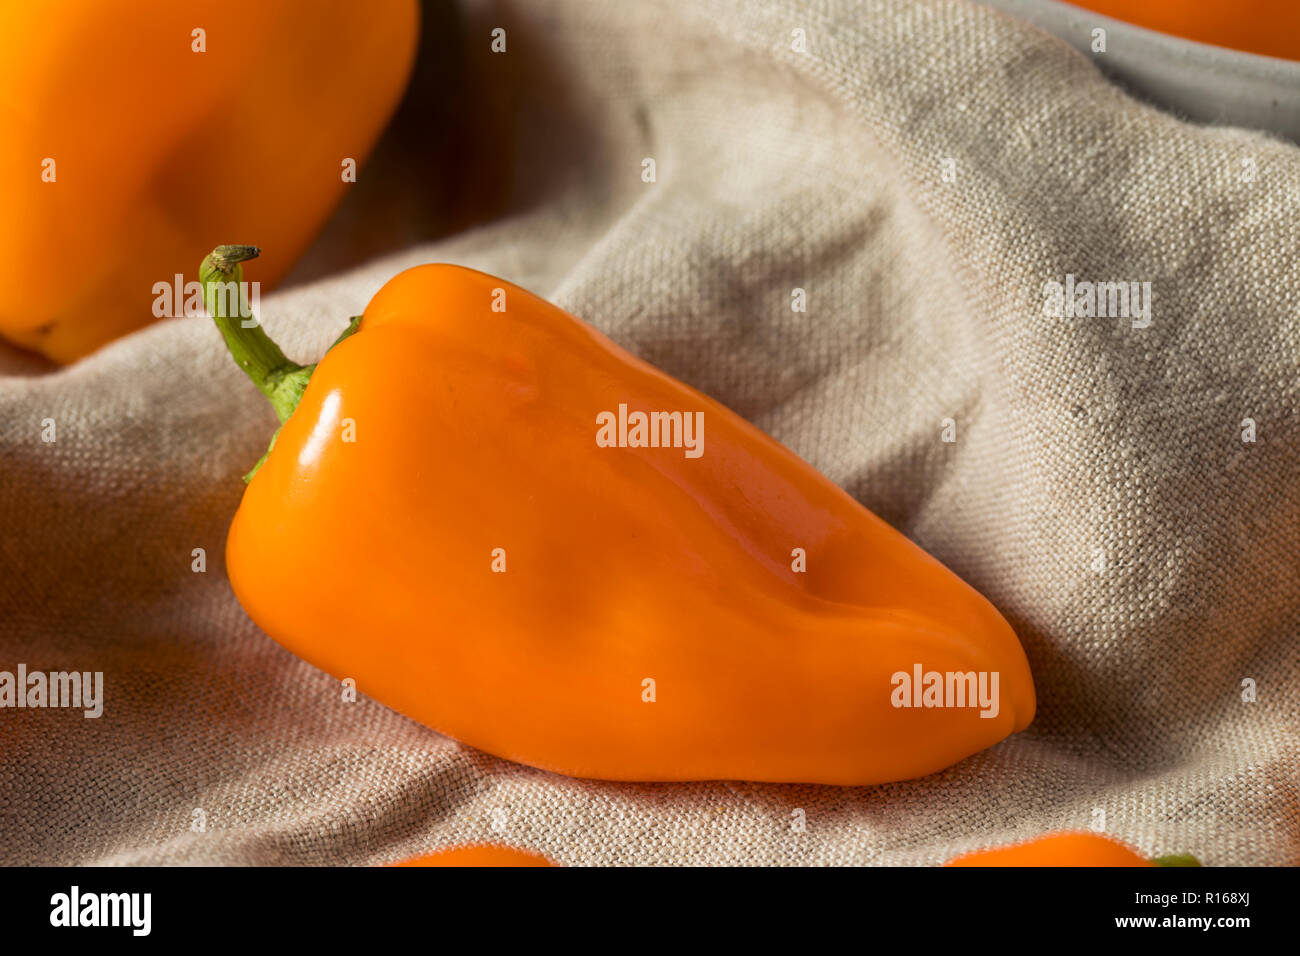 Raw Organic Sweet Orange Peppers Ready to Eat Stock Photo